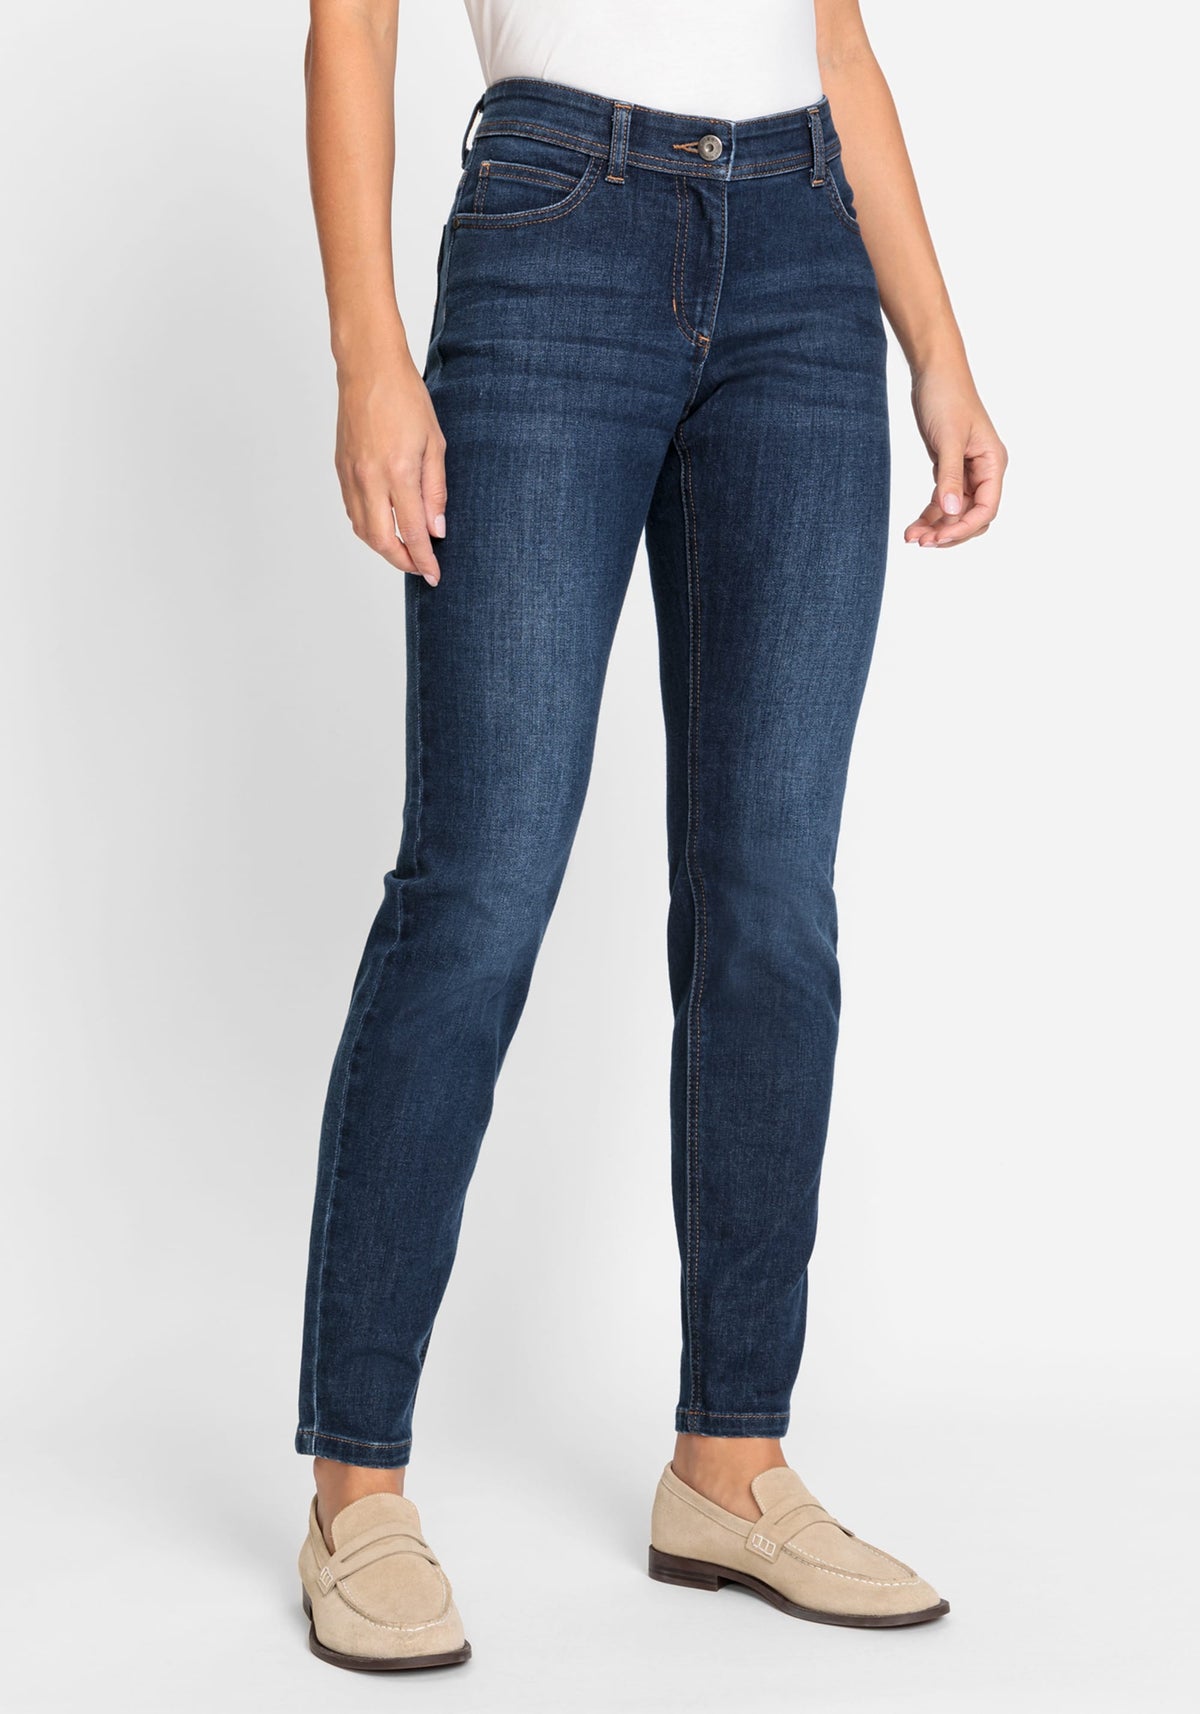 Dana Fit Slim Leg 5-Pocket Power Stretch Jean containing REPREVE®